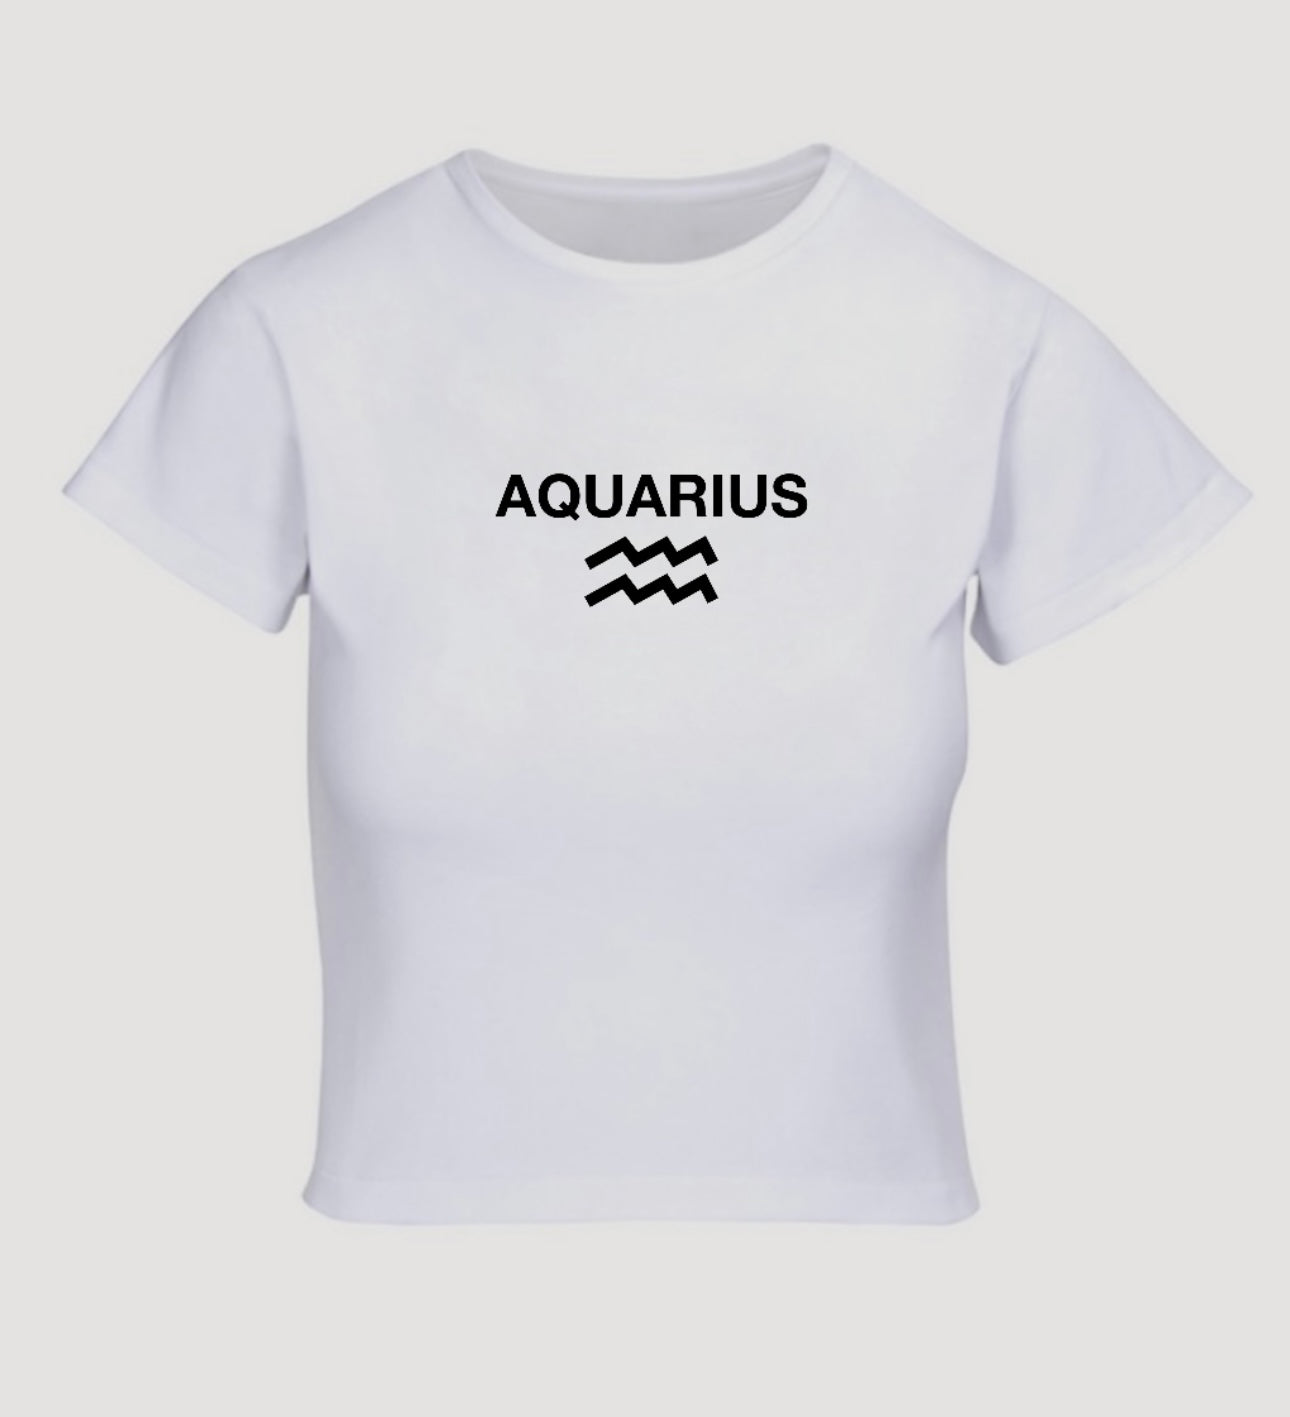 Aquarius crop top